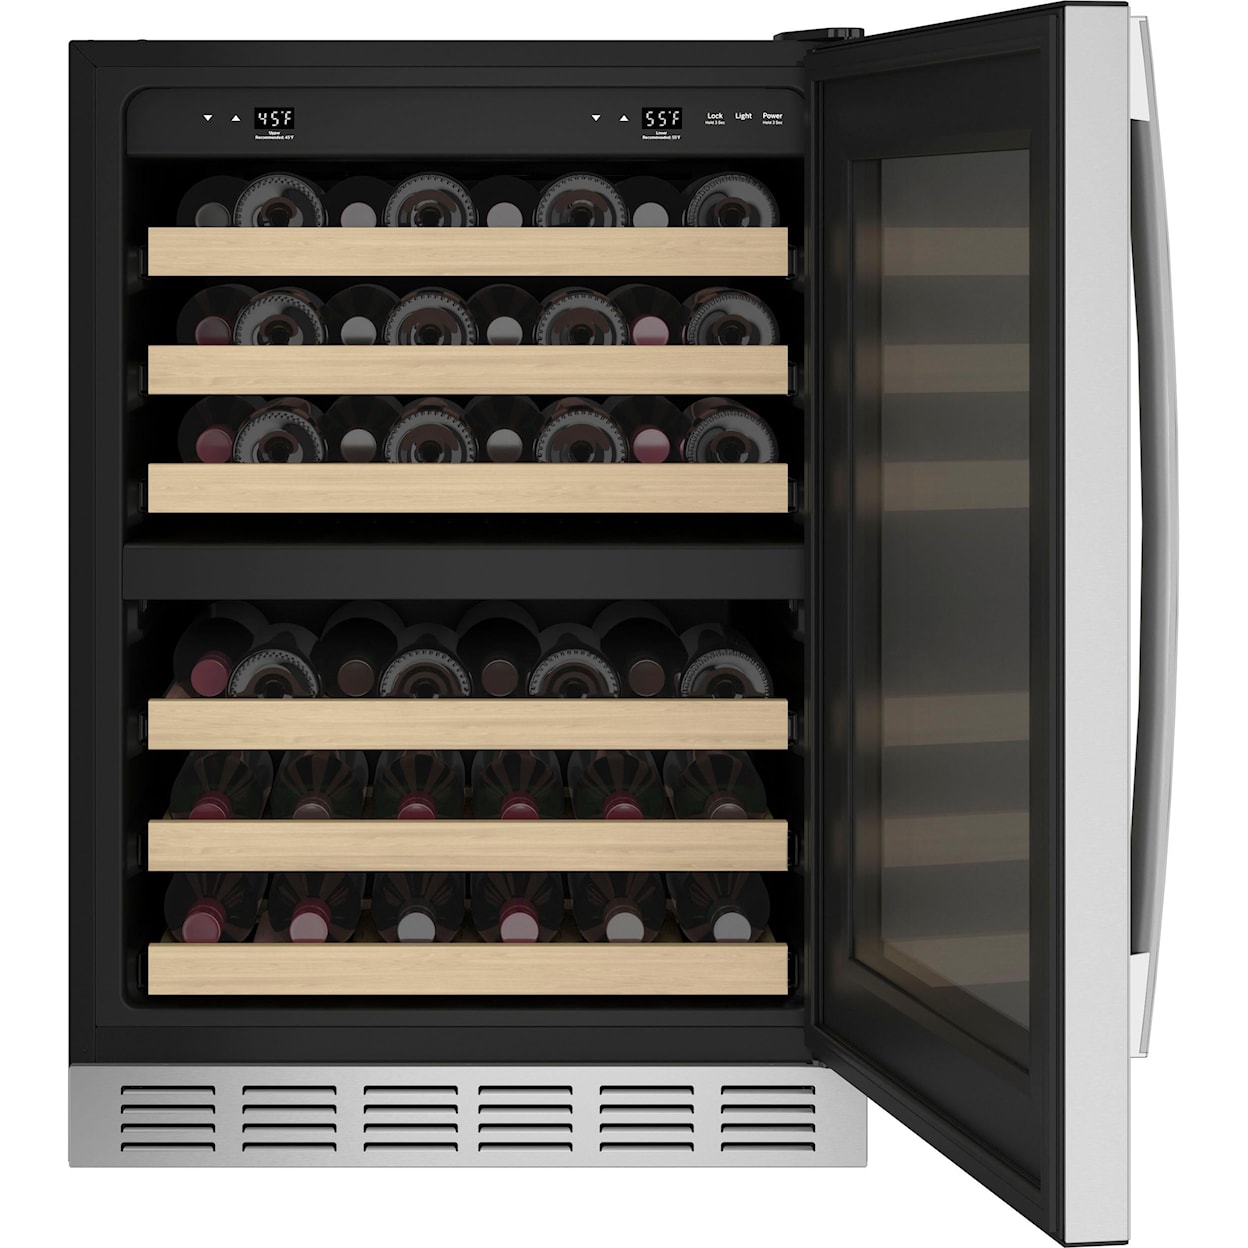 GE Appliances Refrigerators Wine Refrigeration